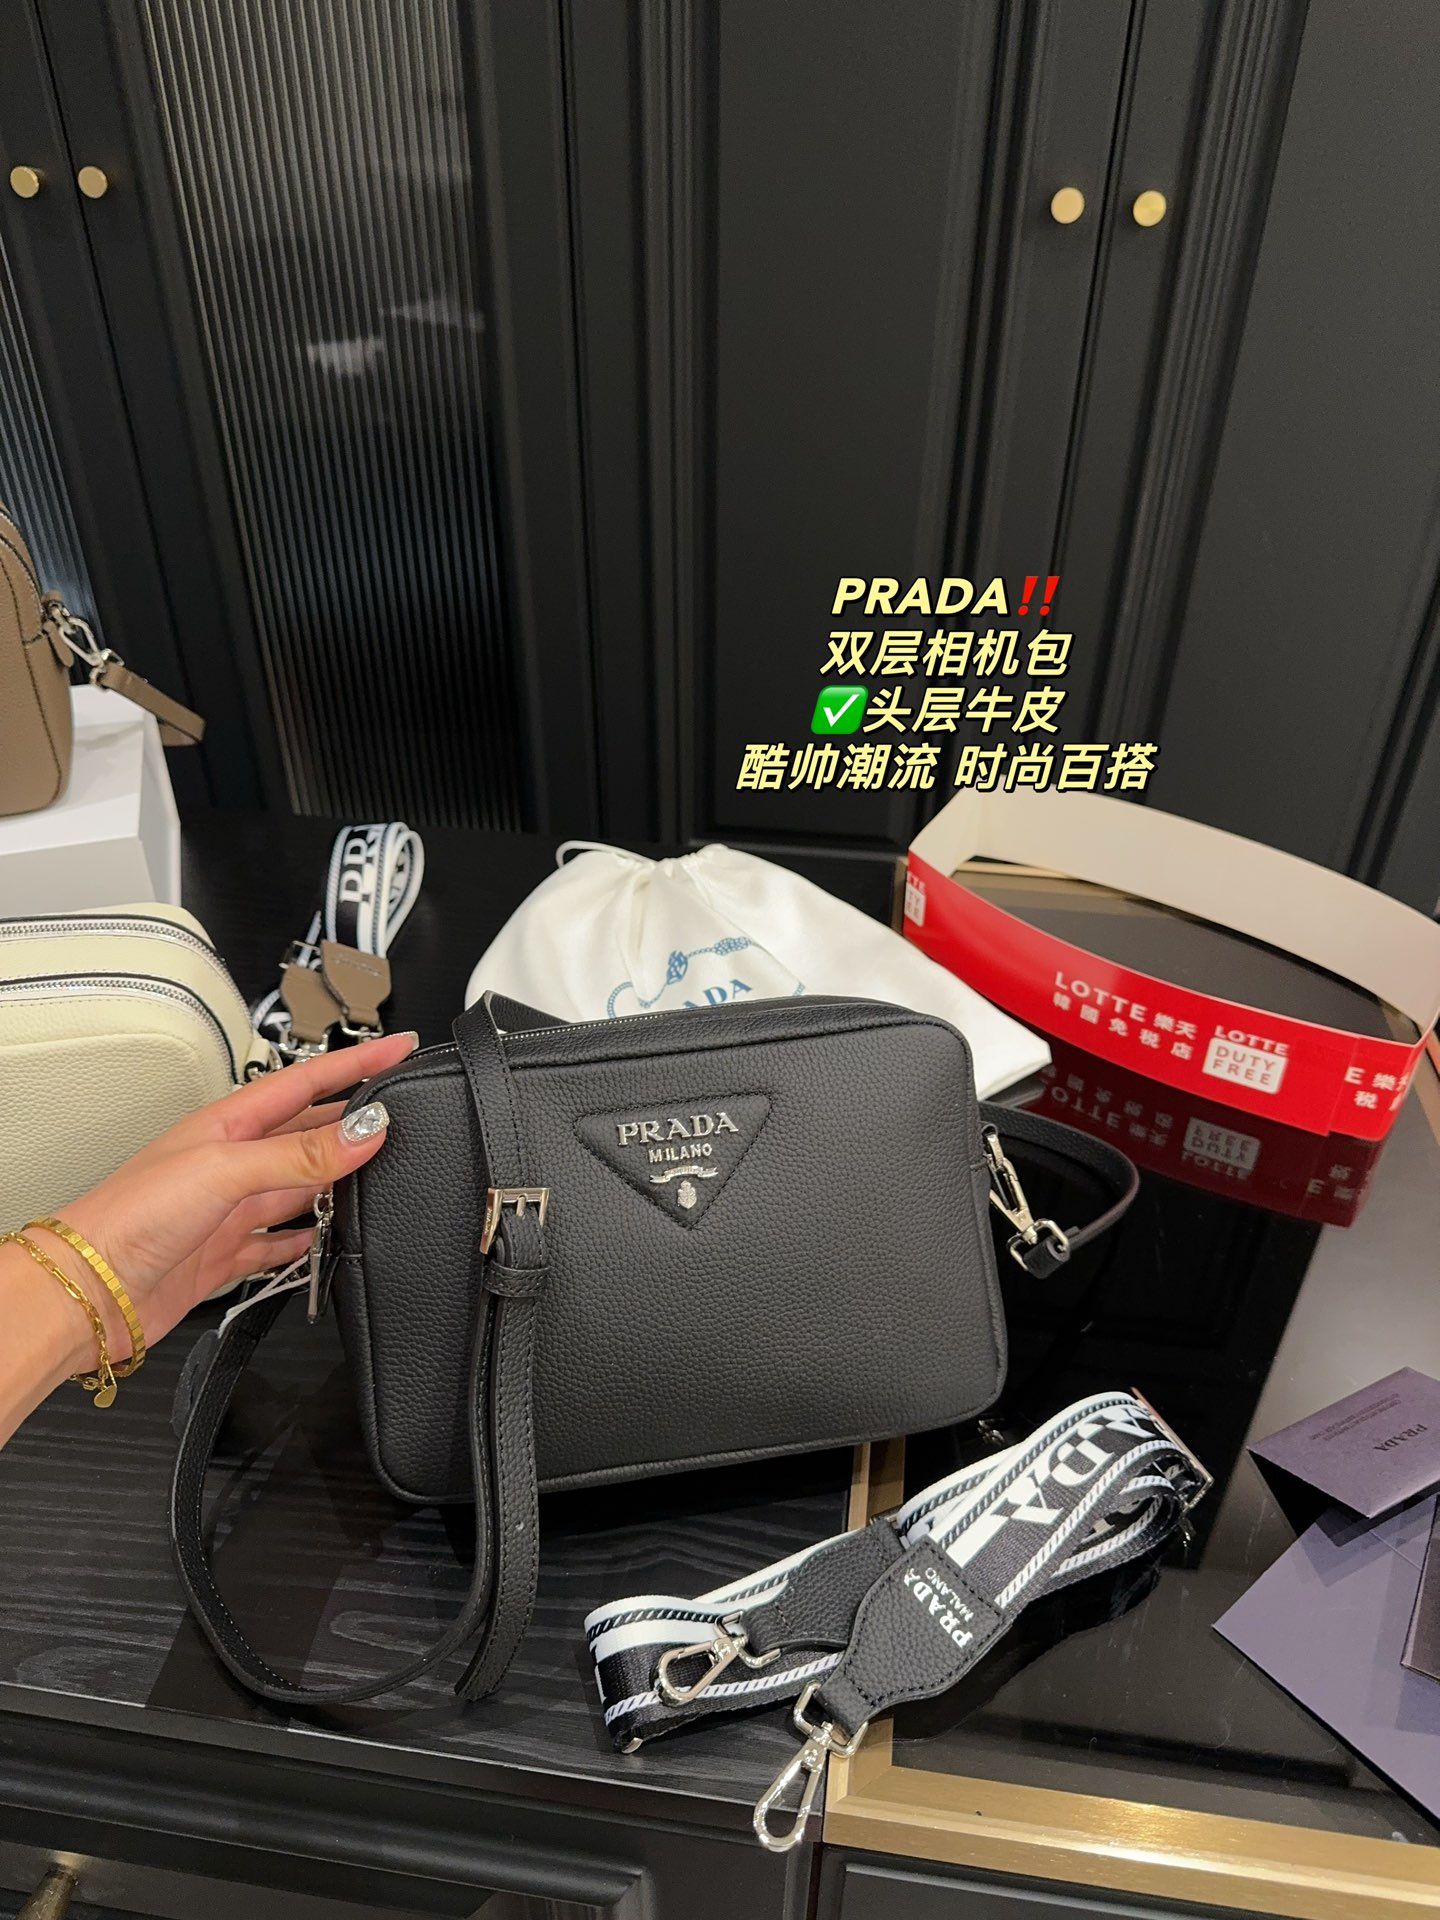 Prada Camera Bags Top brands like
 Cowhide Fashion